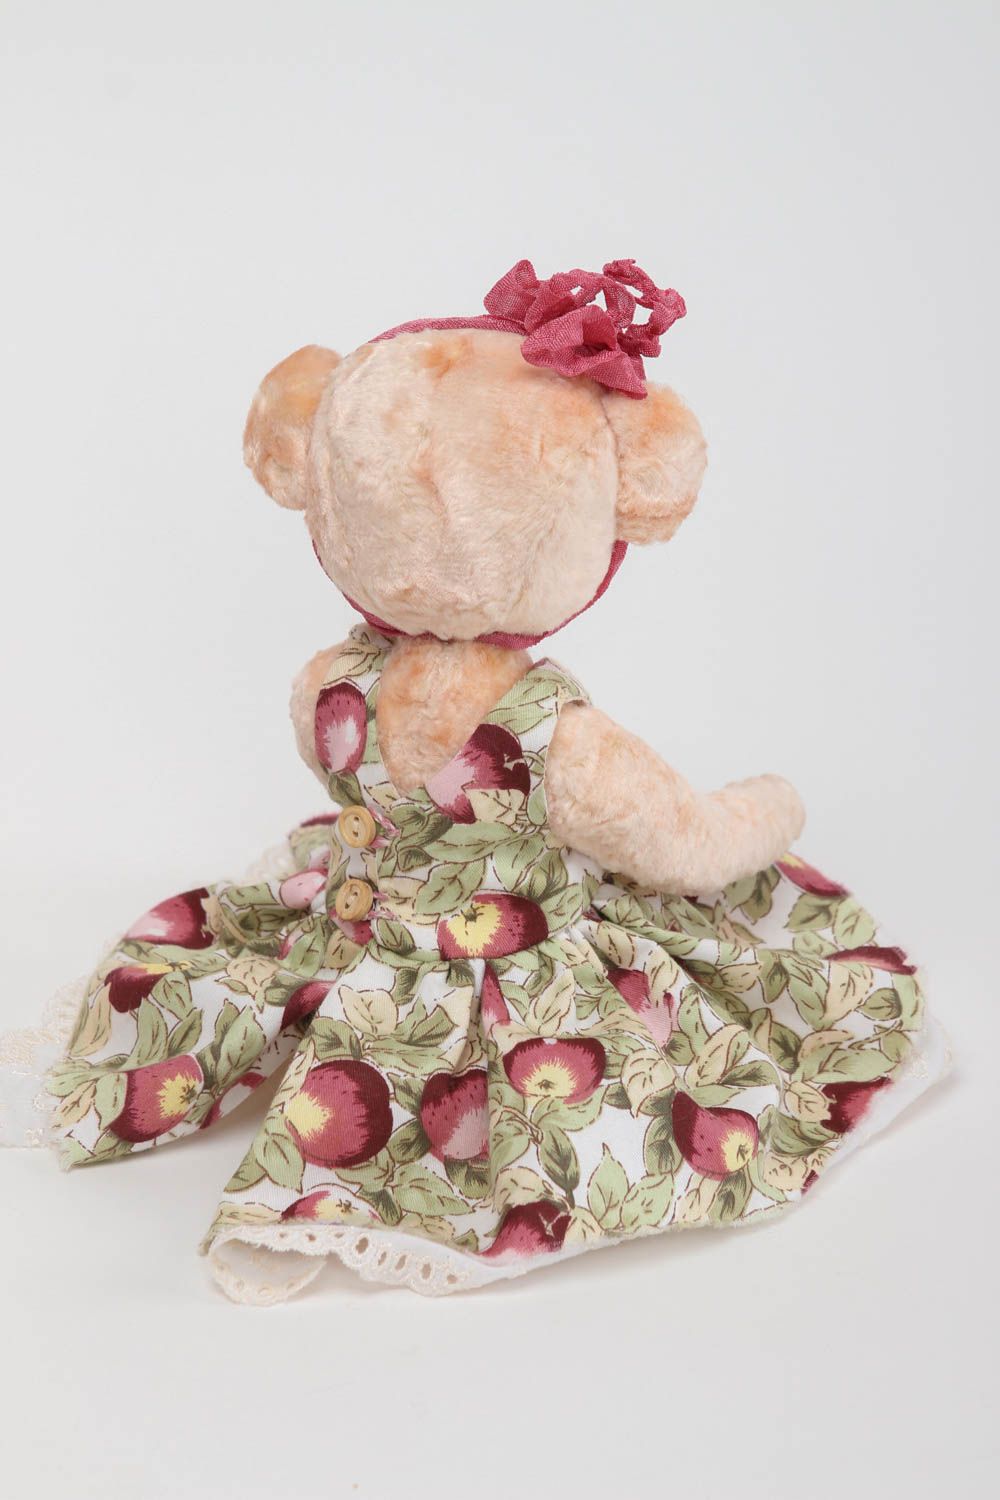 Vintage teddy bear in a dress .